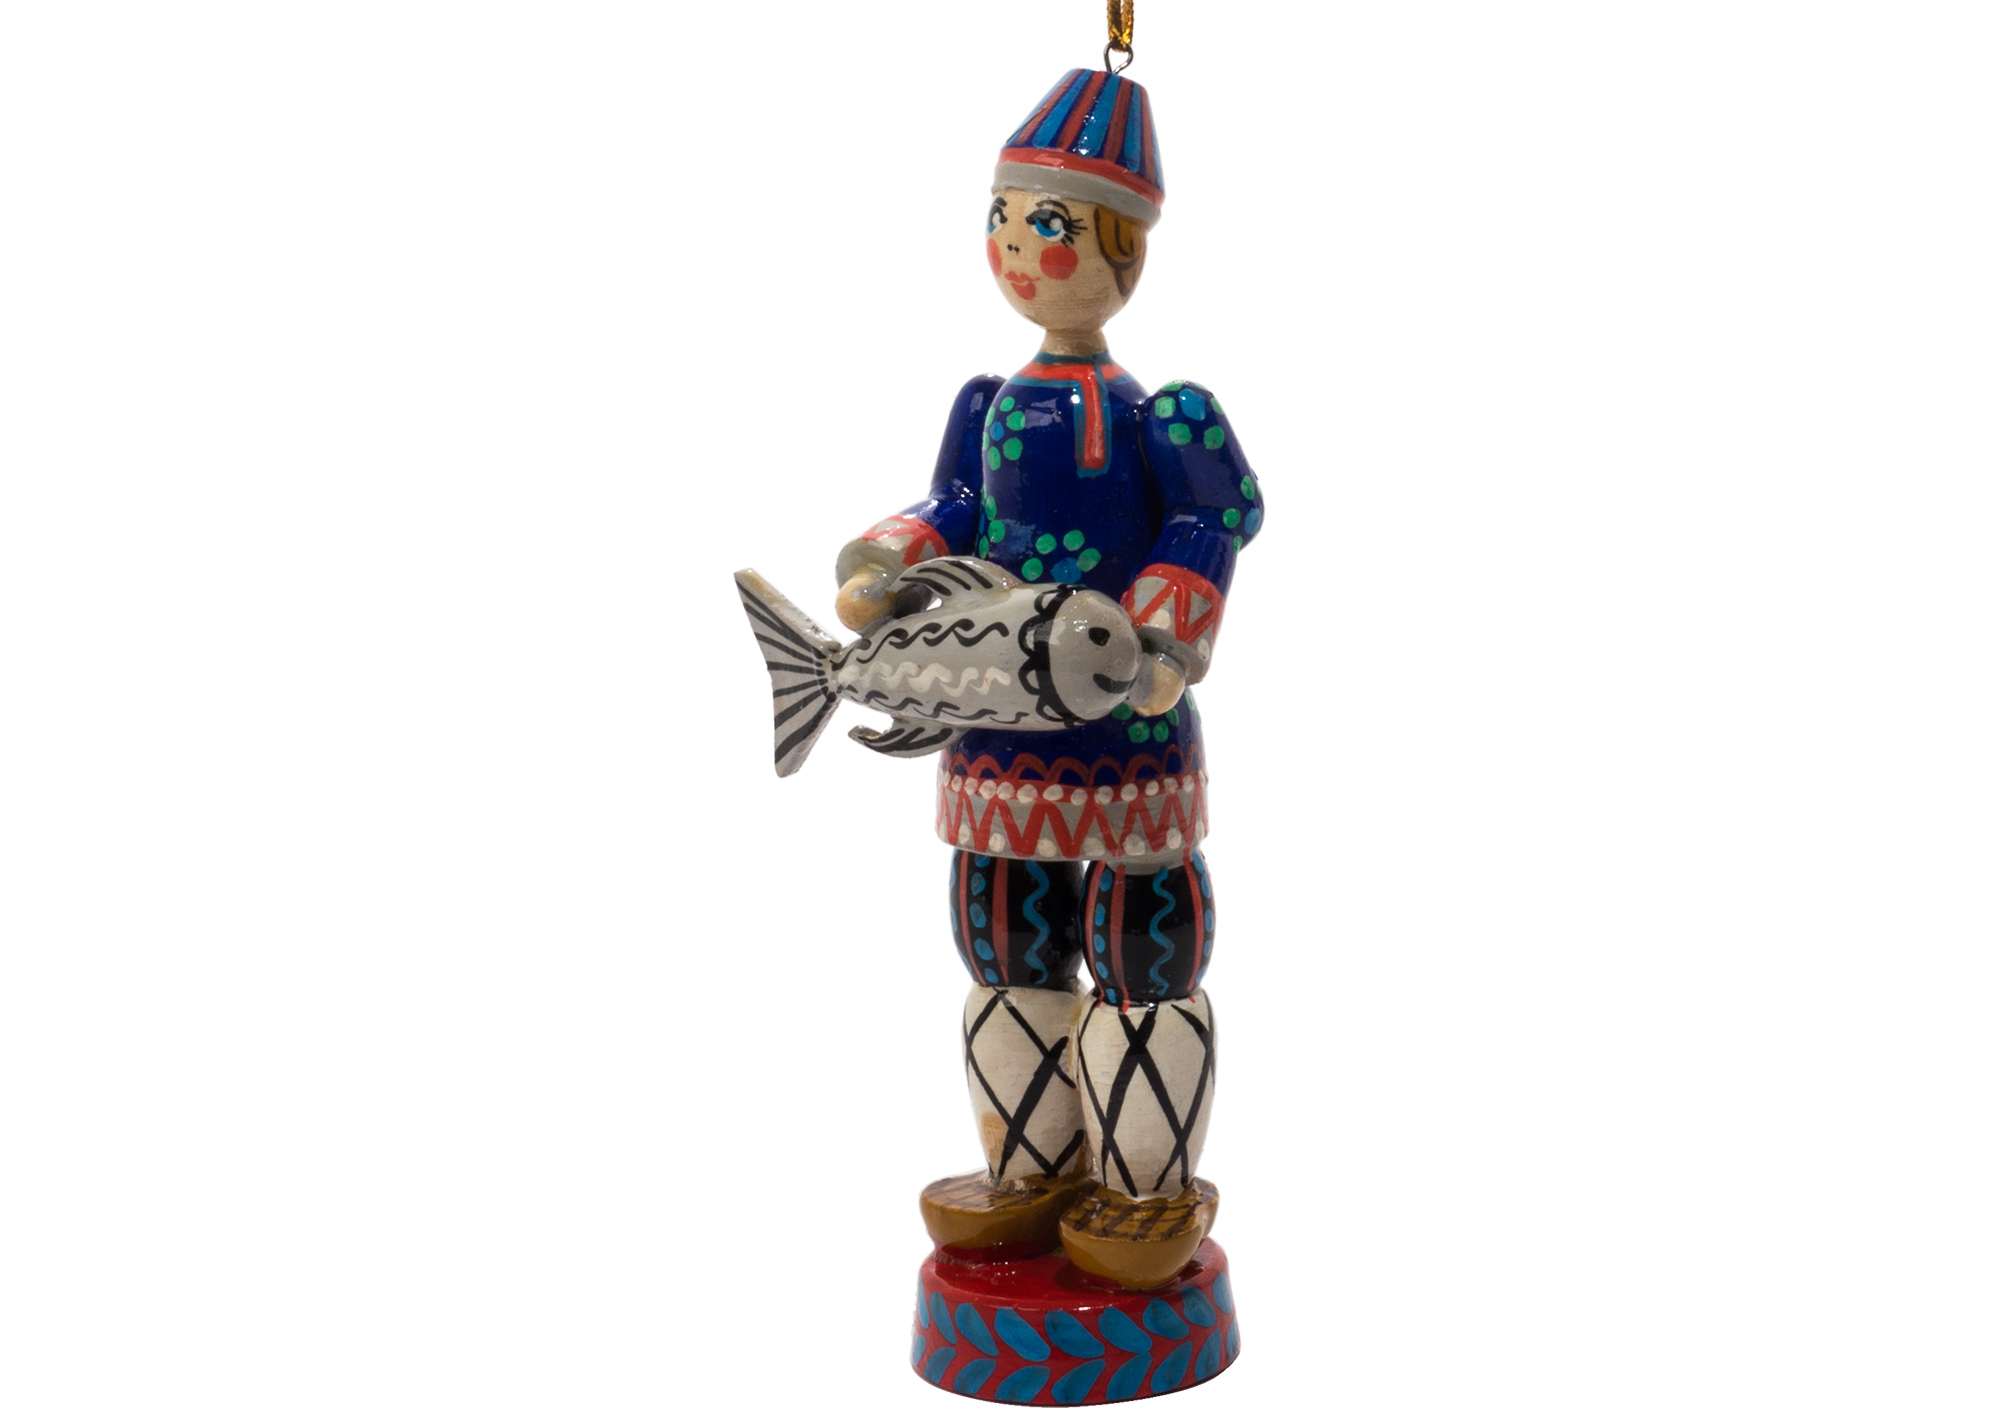 Buy Russian Folk Fisherman Ornament 5" at GoldenCockerel.com